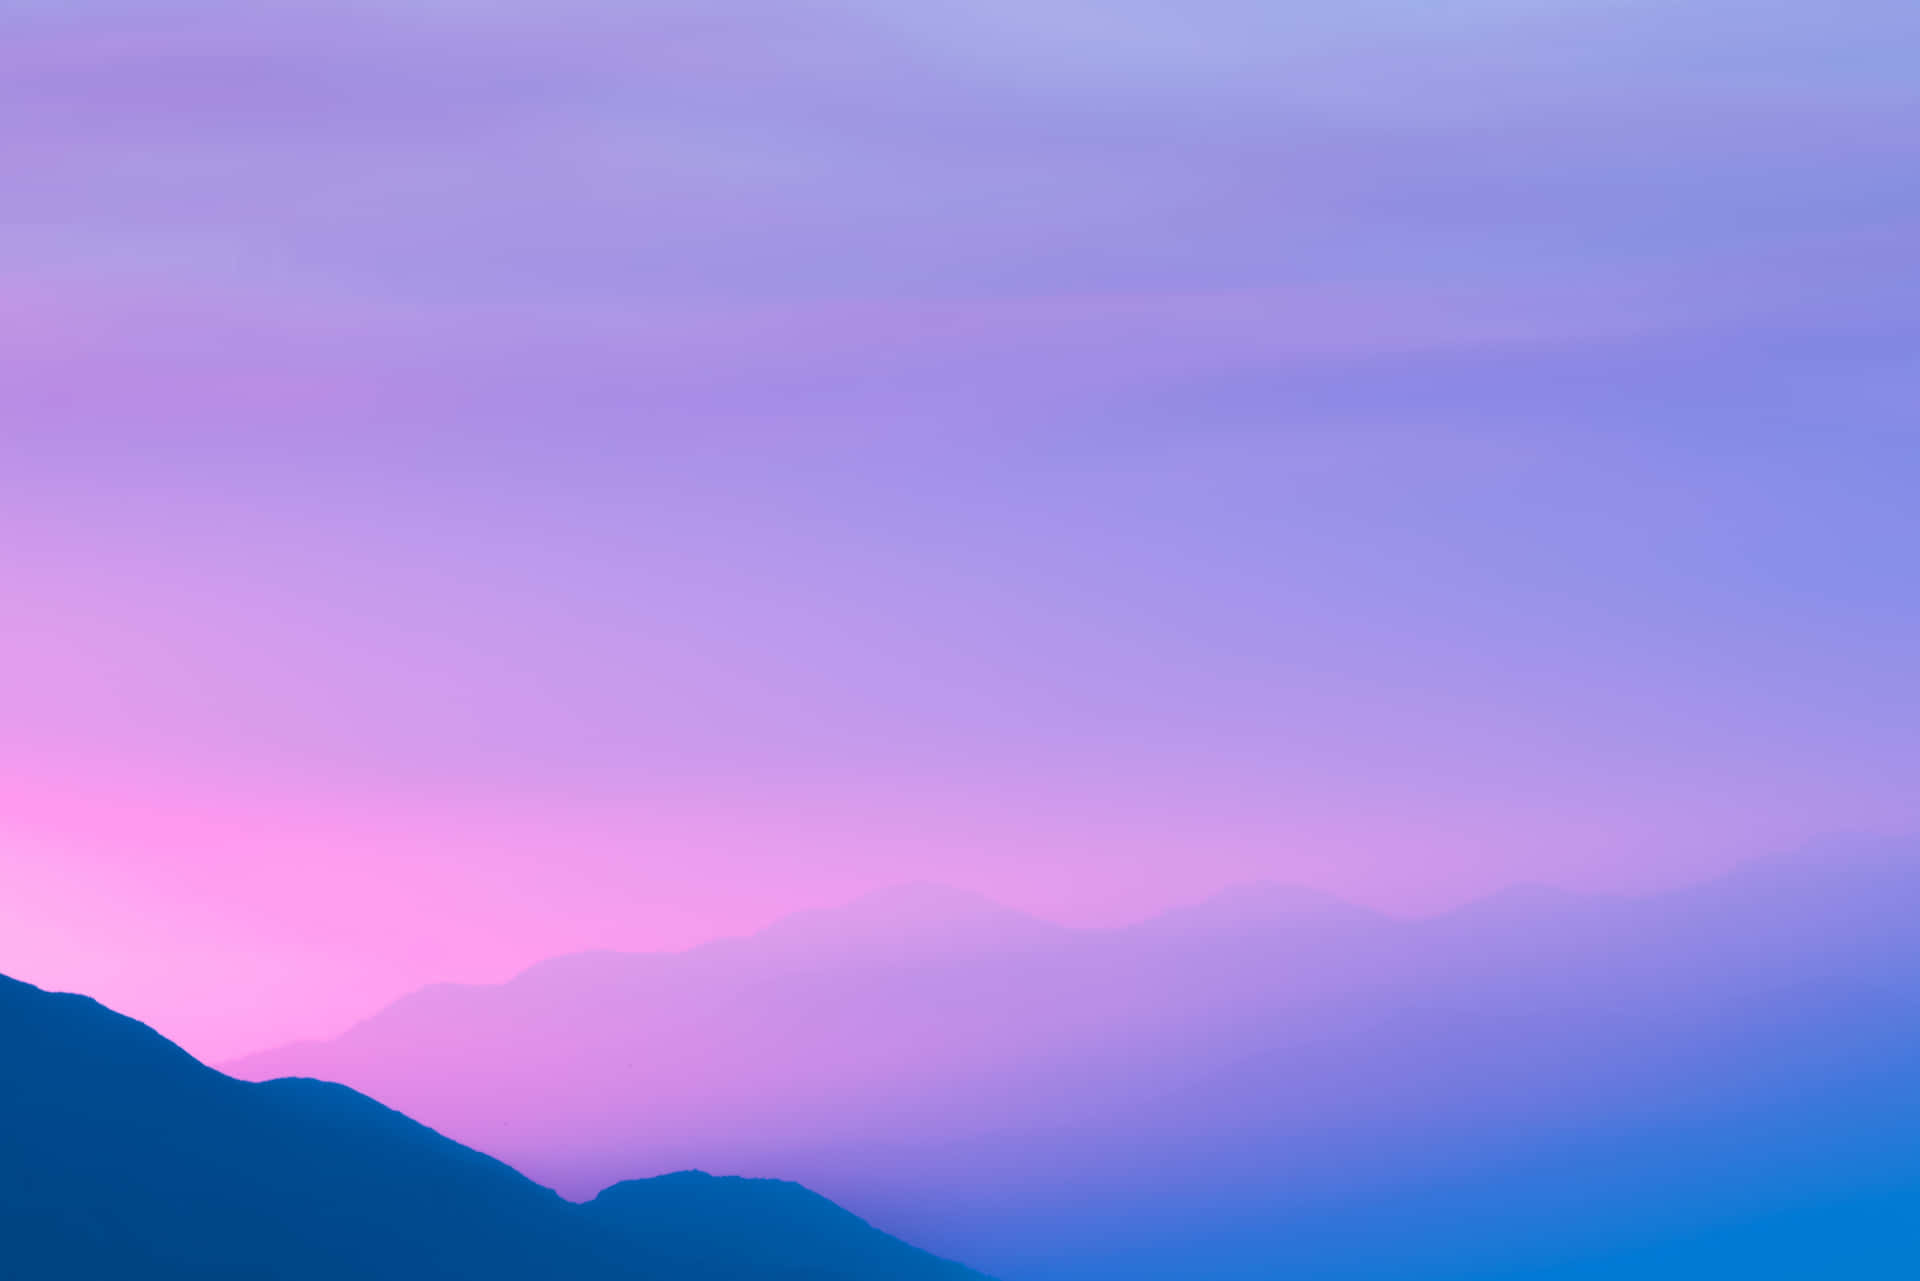 A beautiful landscape of a purple morning sky